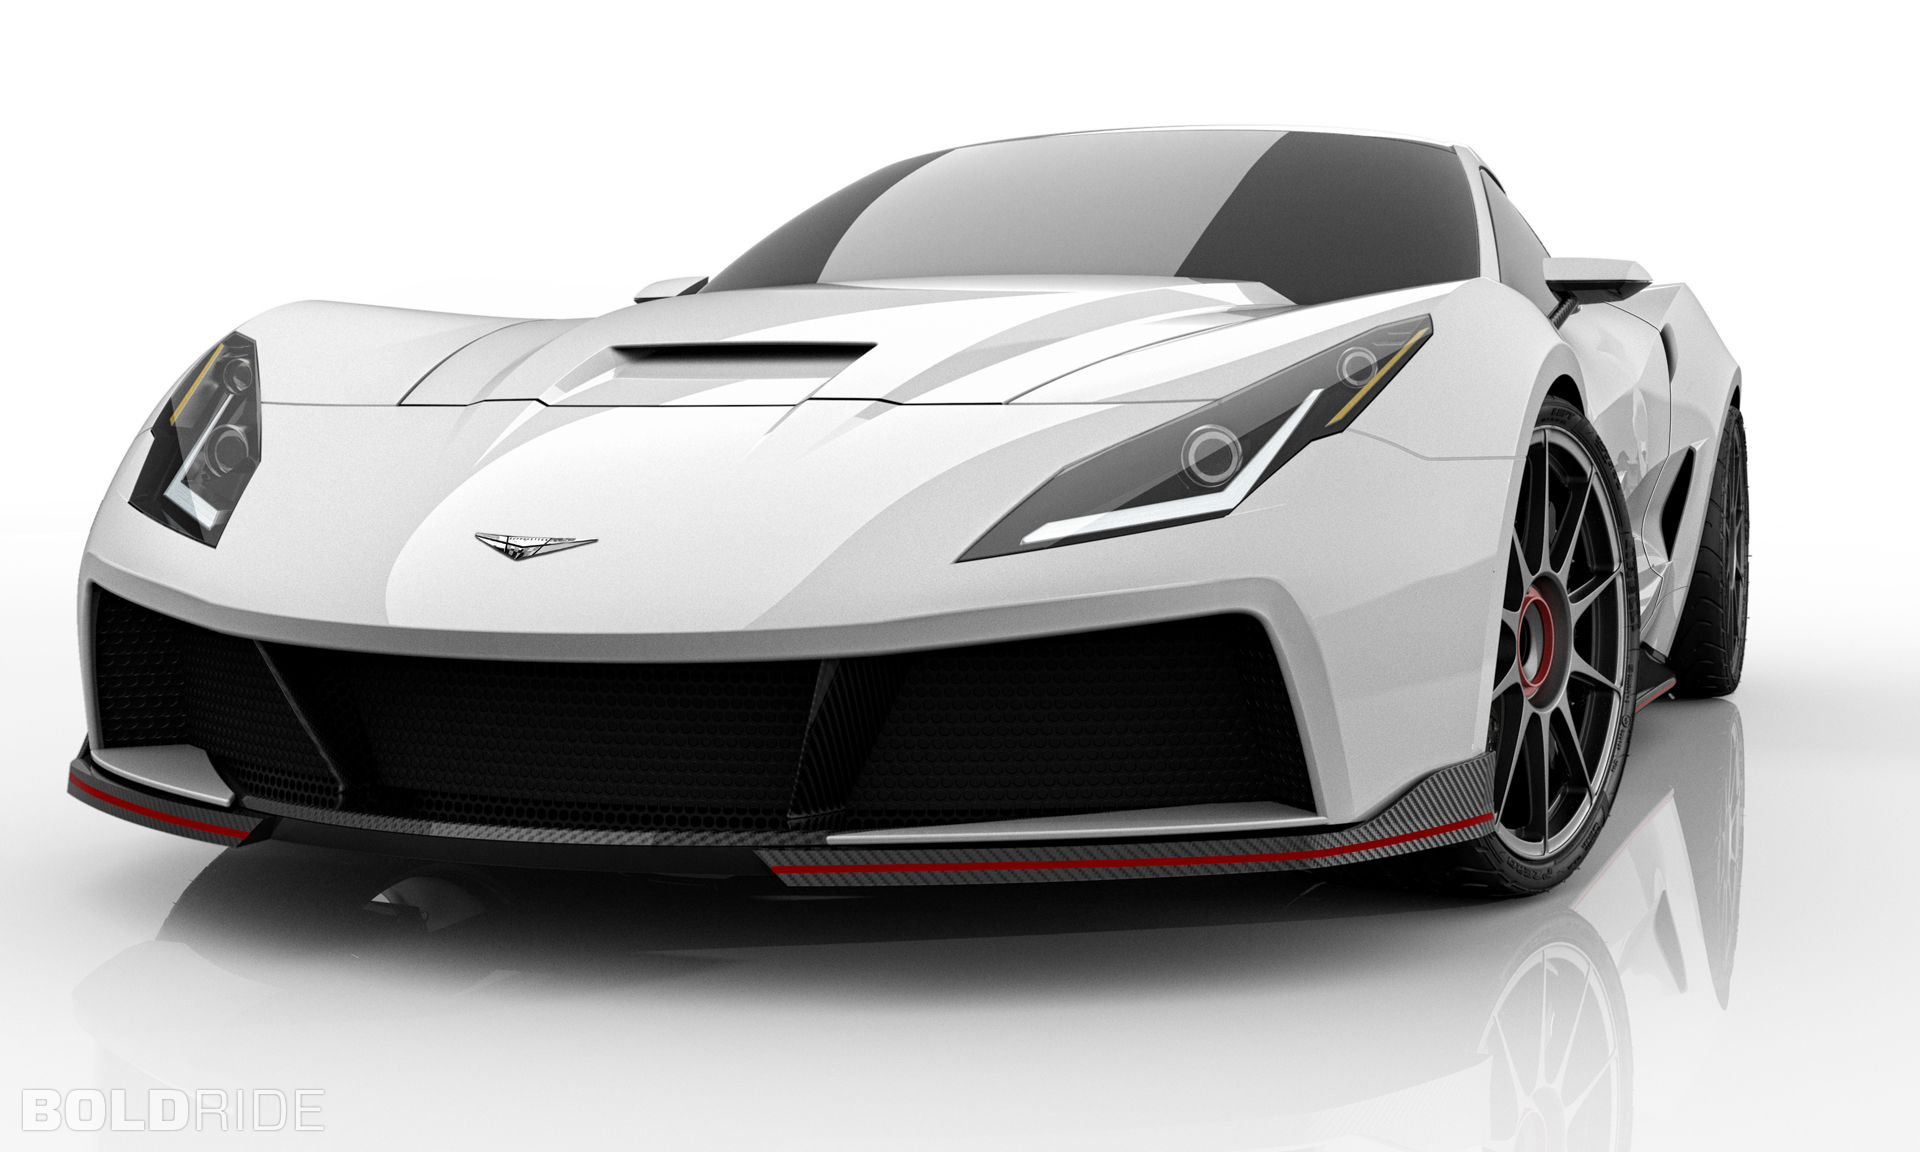 2013, Supervettes, Sv8r, Concept, Corvette, Chevrolet, Supercar, Muscle, Tuning,  11 Wallpaper